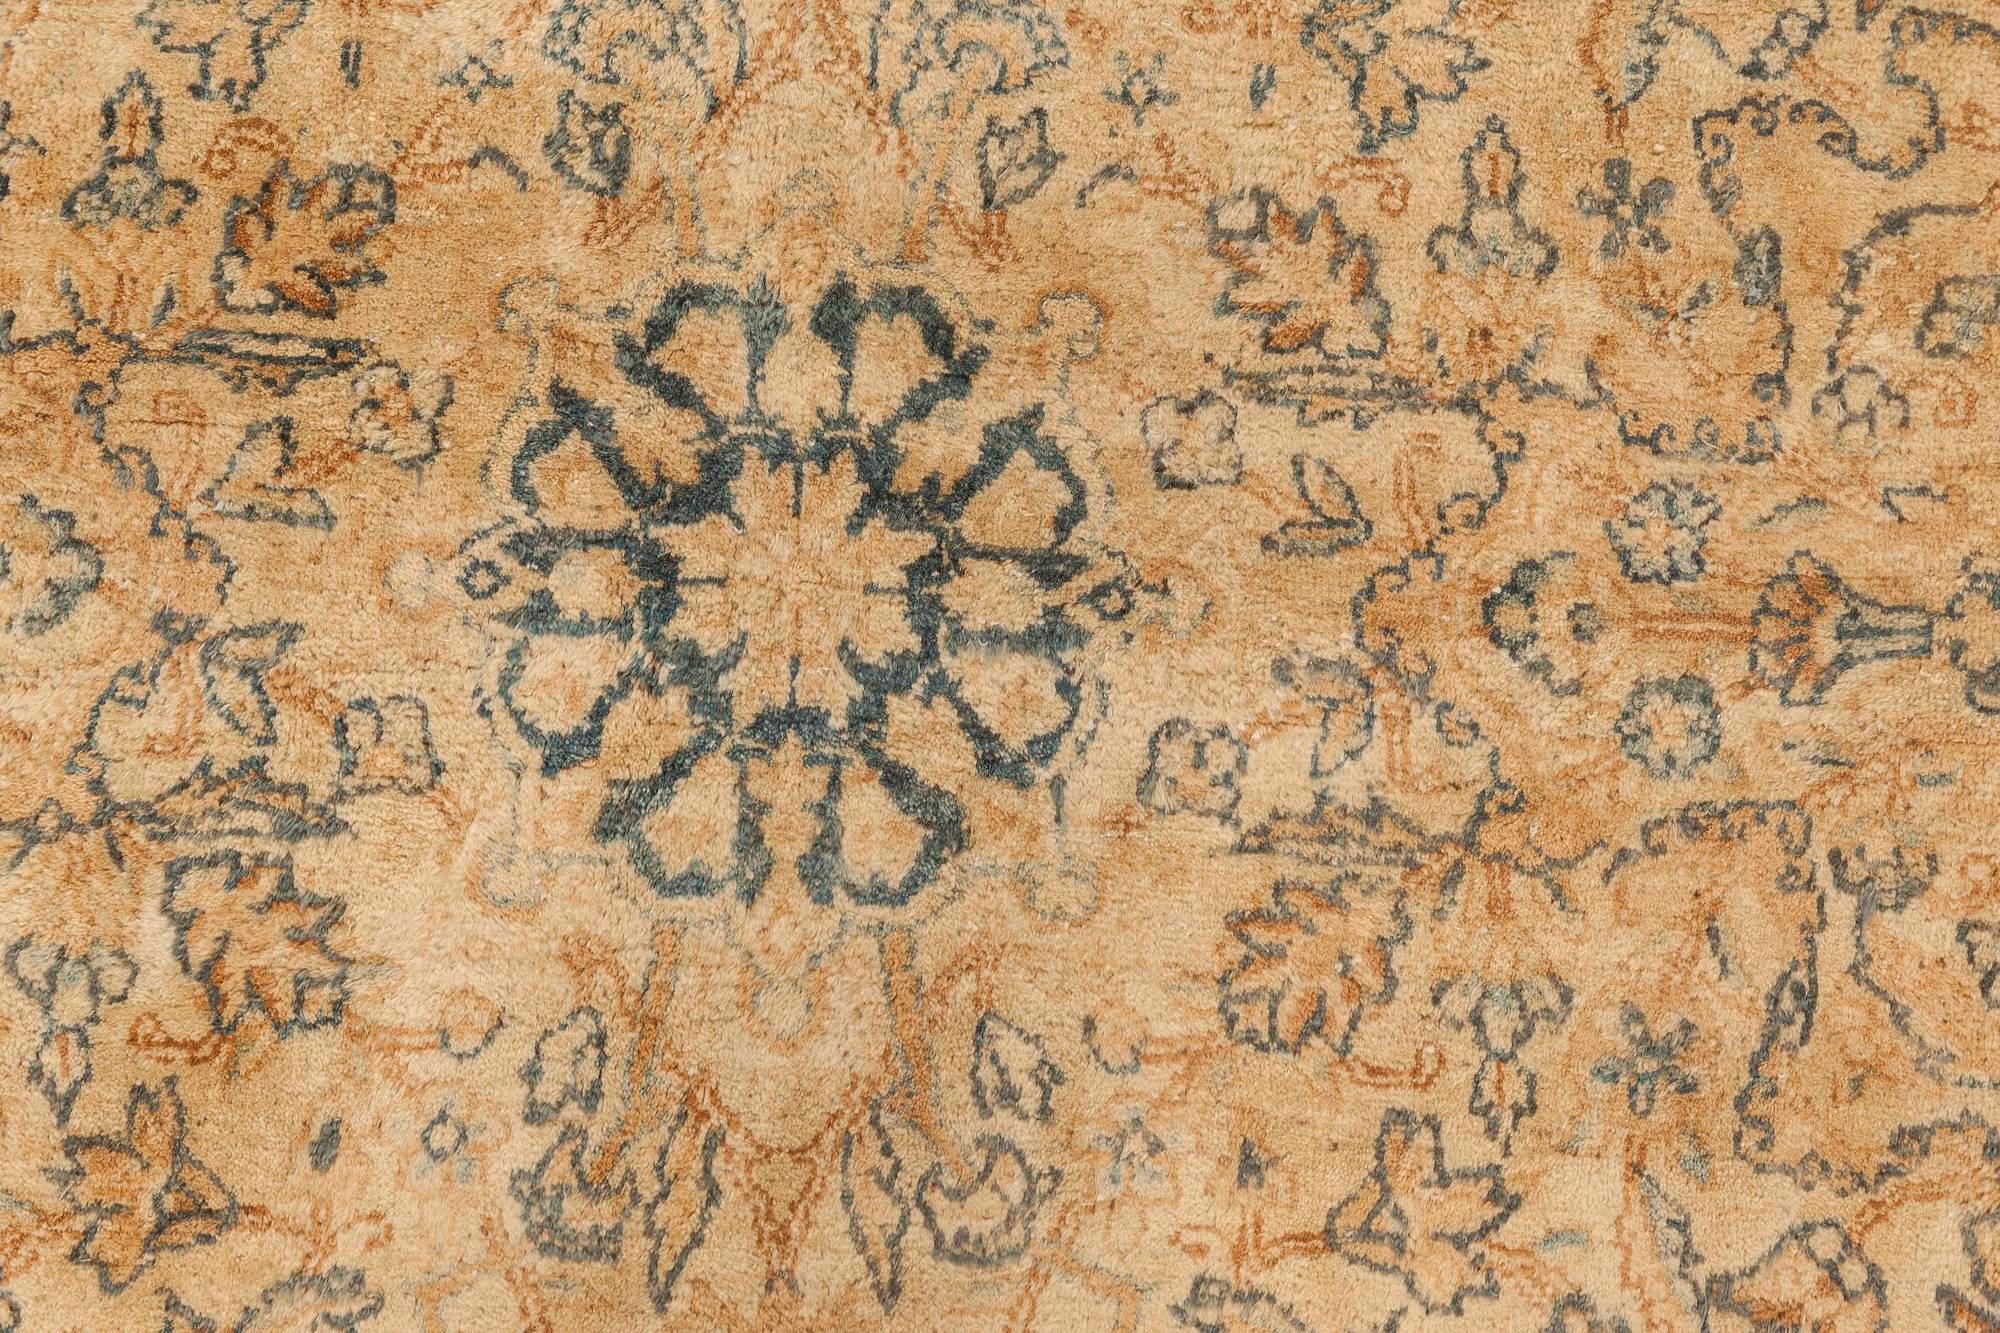 Authentic 19th century Persian kirman beige carpet
Size: 13'7